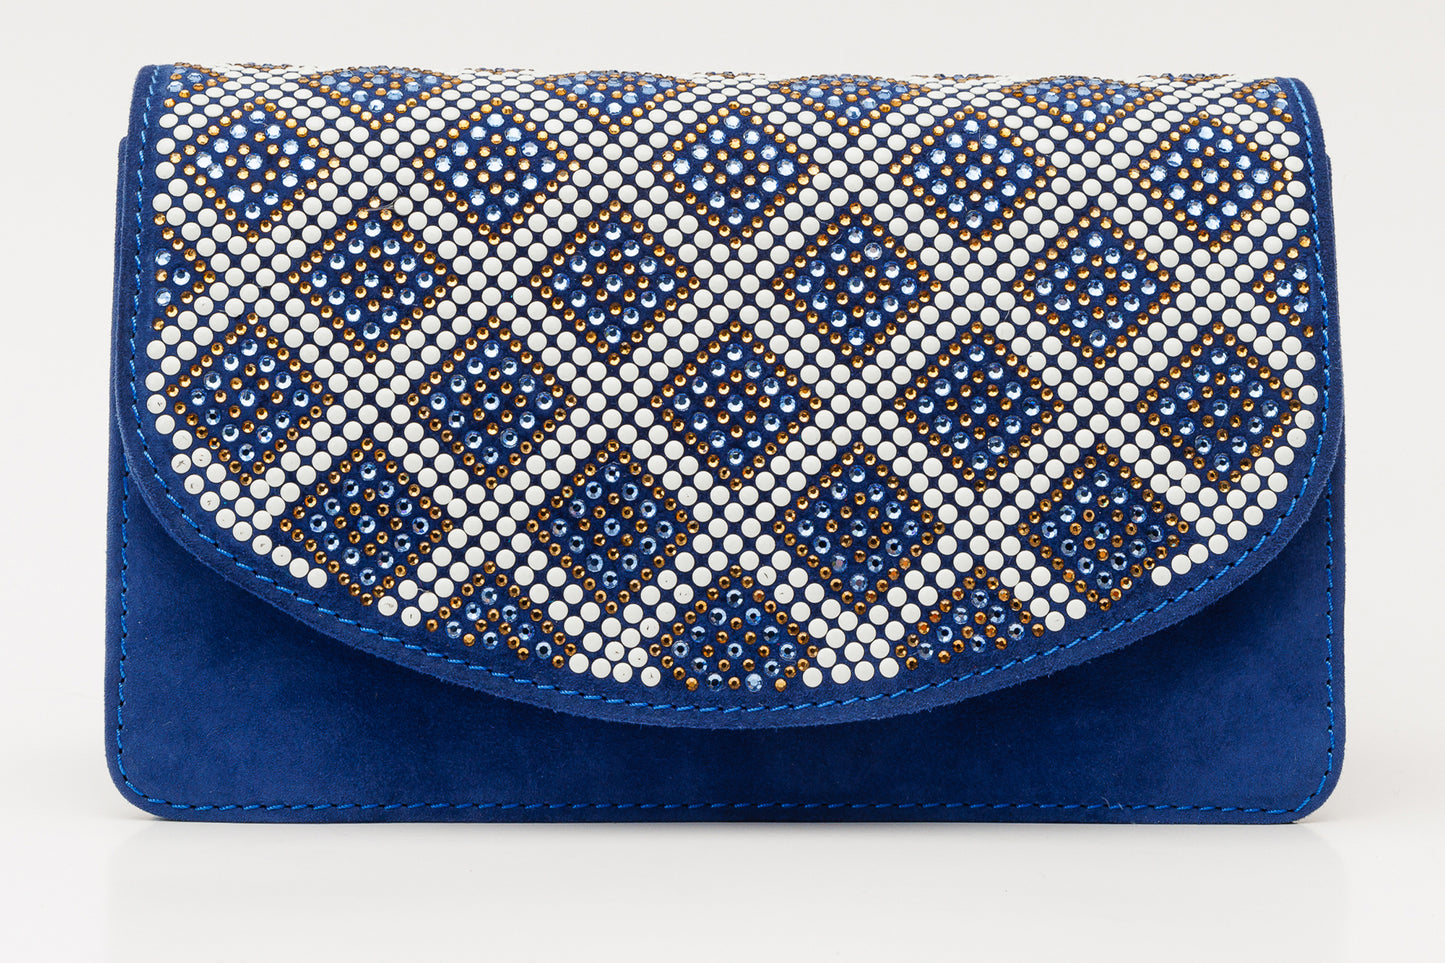 The Nampula Sax Blue Glitter Leather Handbag